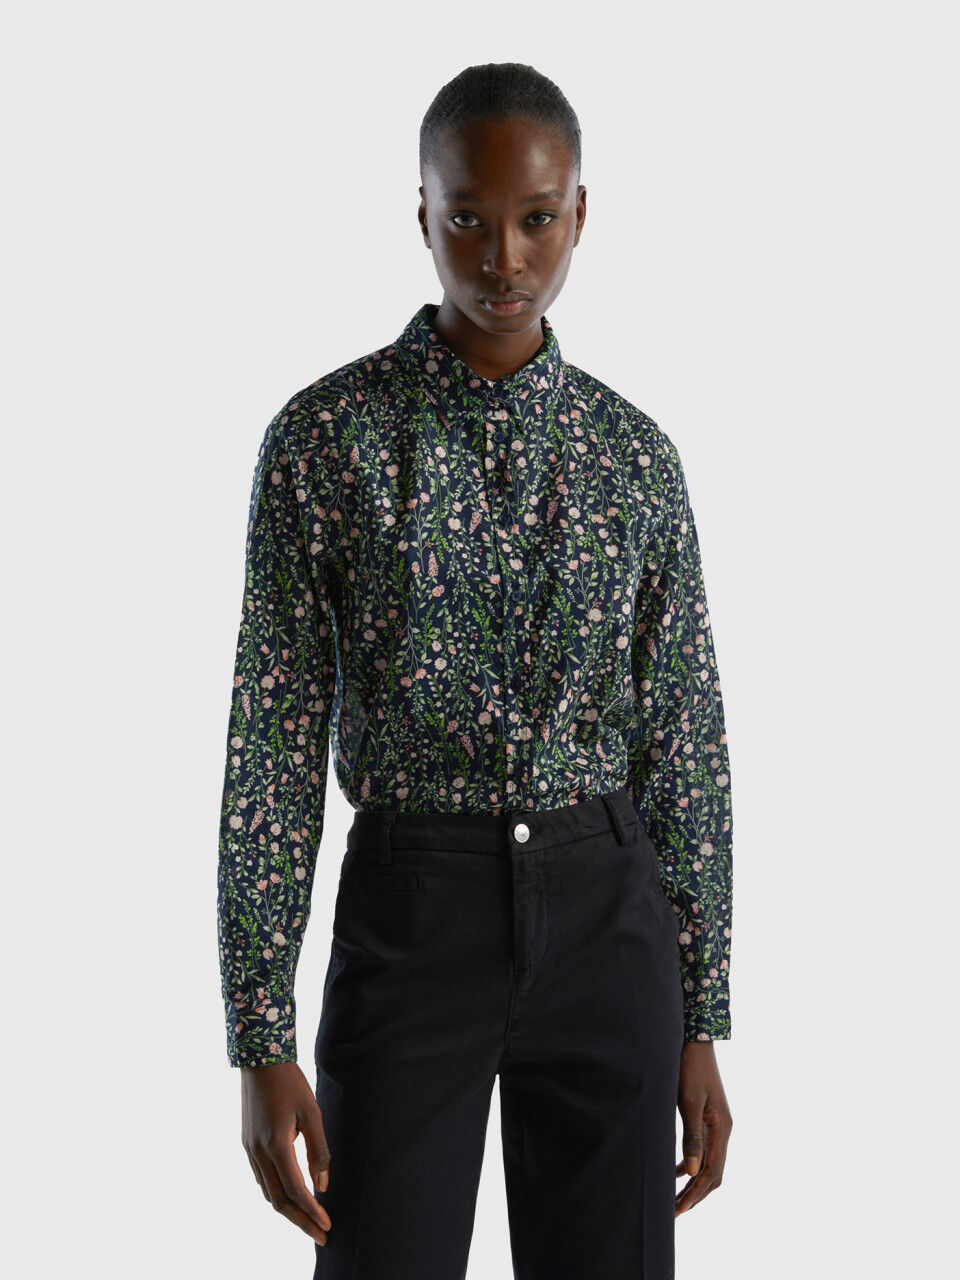 100% cotton patterned shirt